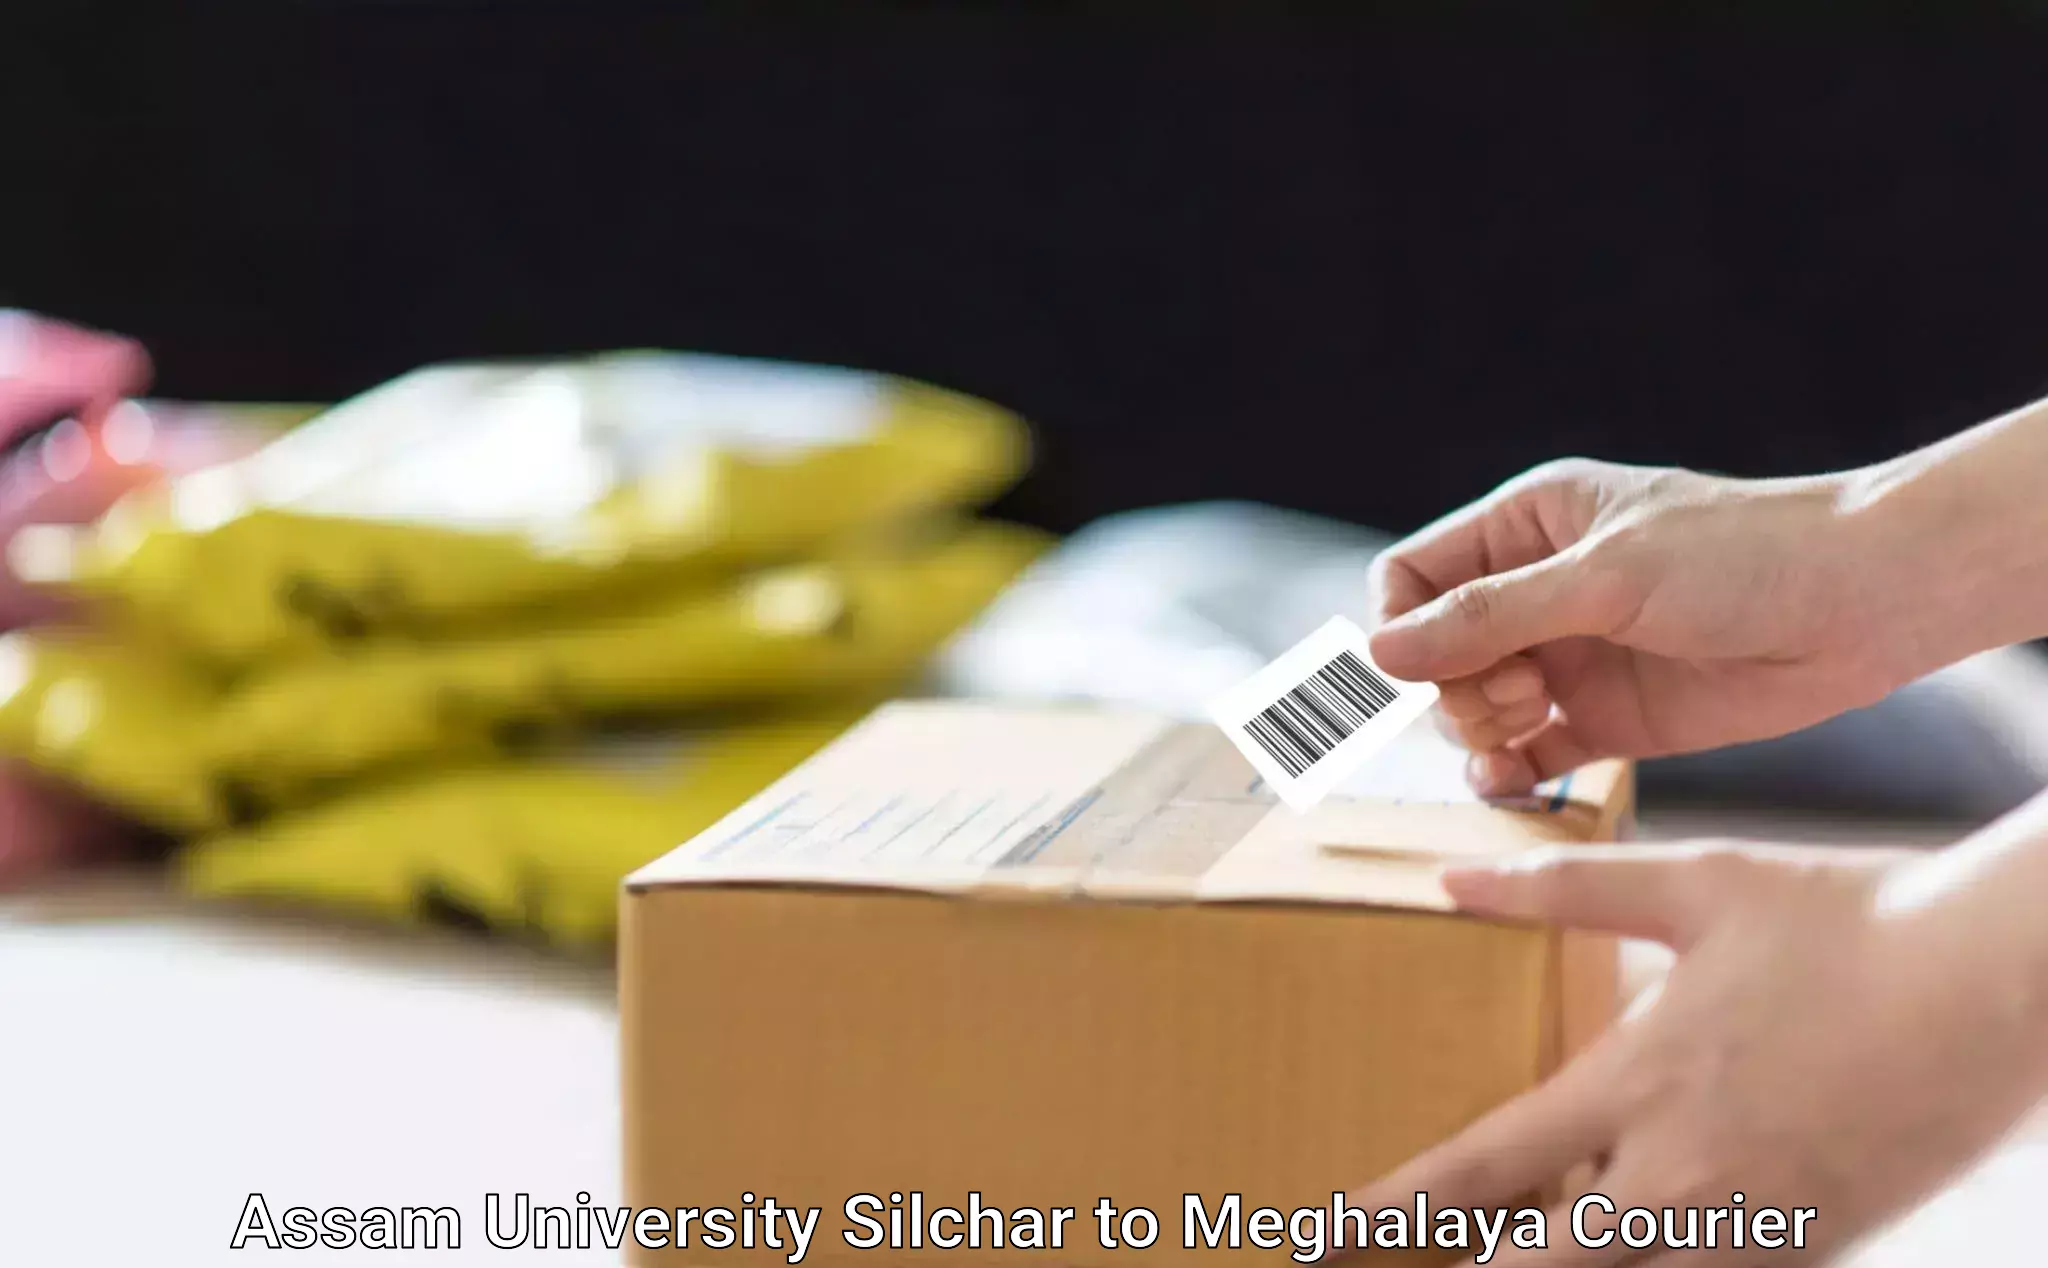 Cash on delivery service Assam University Silchar to Shillong